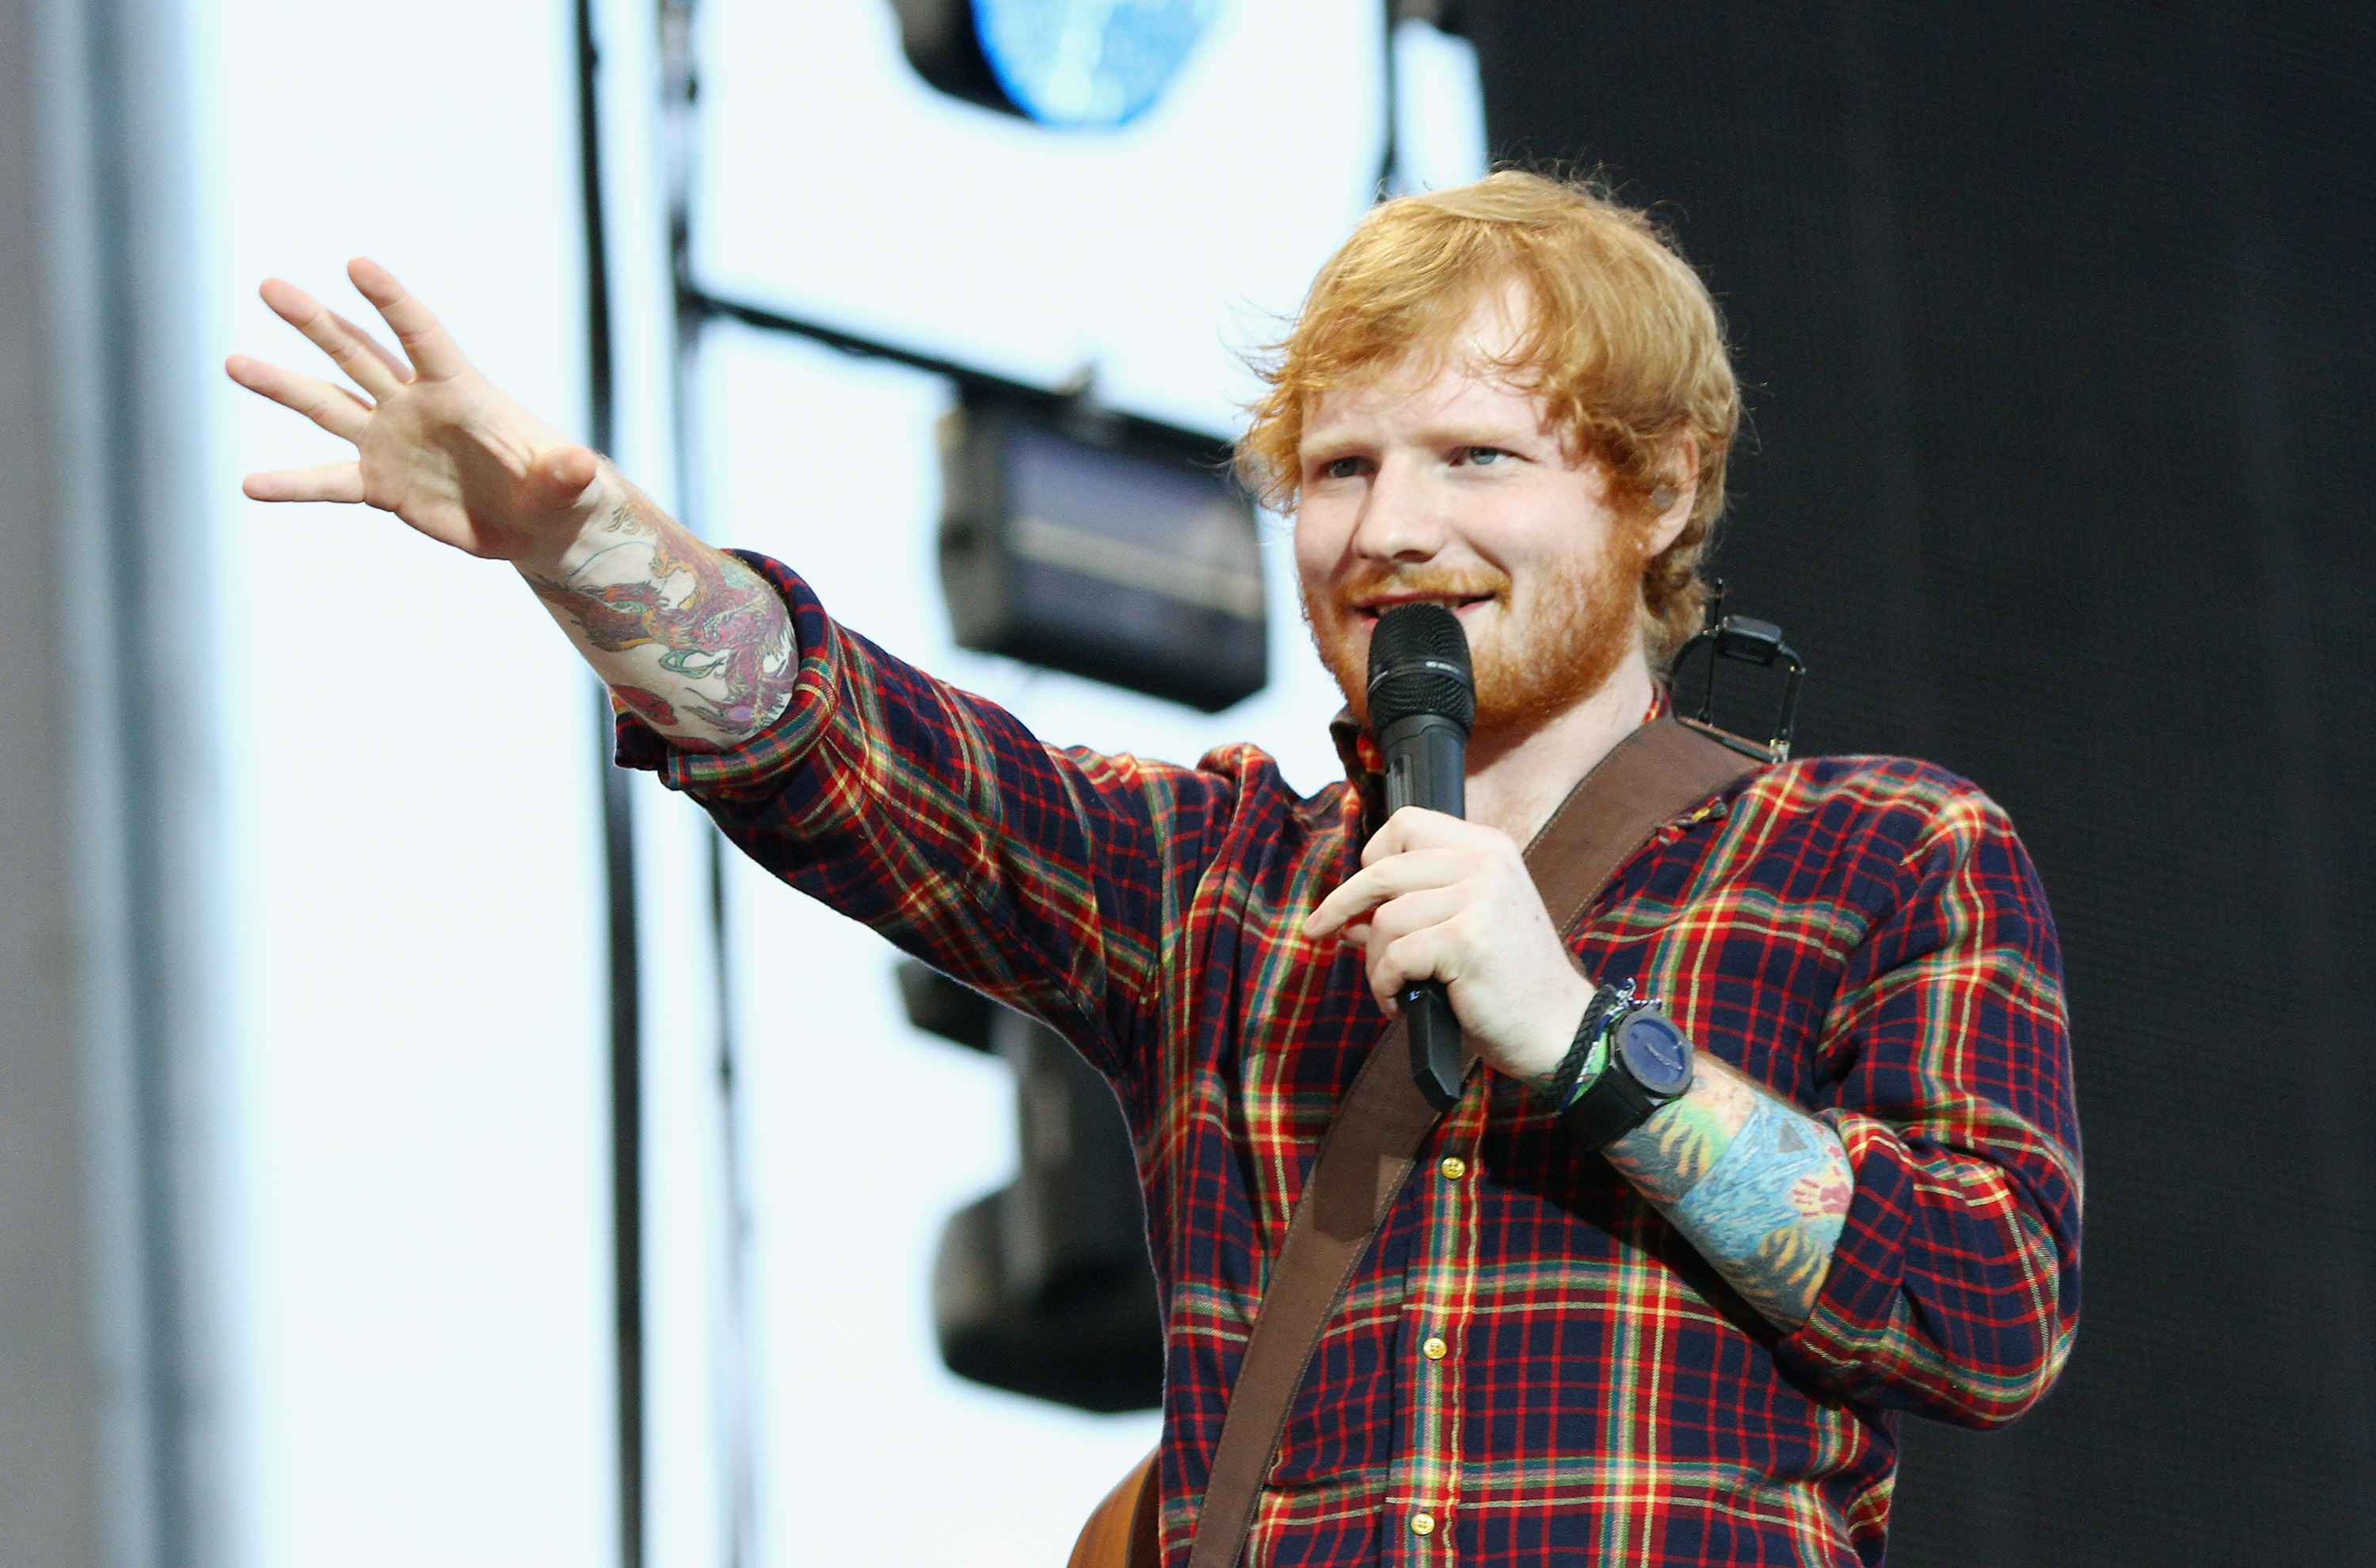 Ed Sheeran performs at Croke Park on July 24, 2015 in Dublin, Ireland. (Phillip Massey—WireImage)